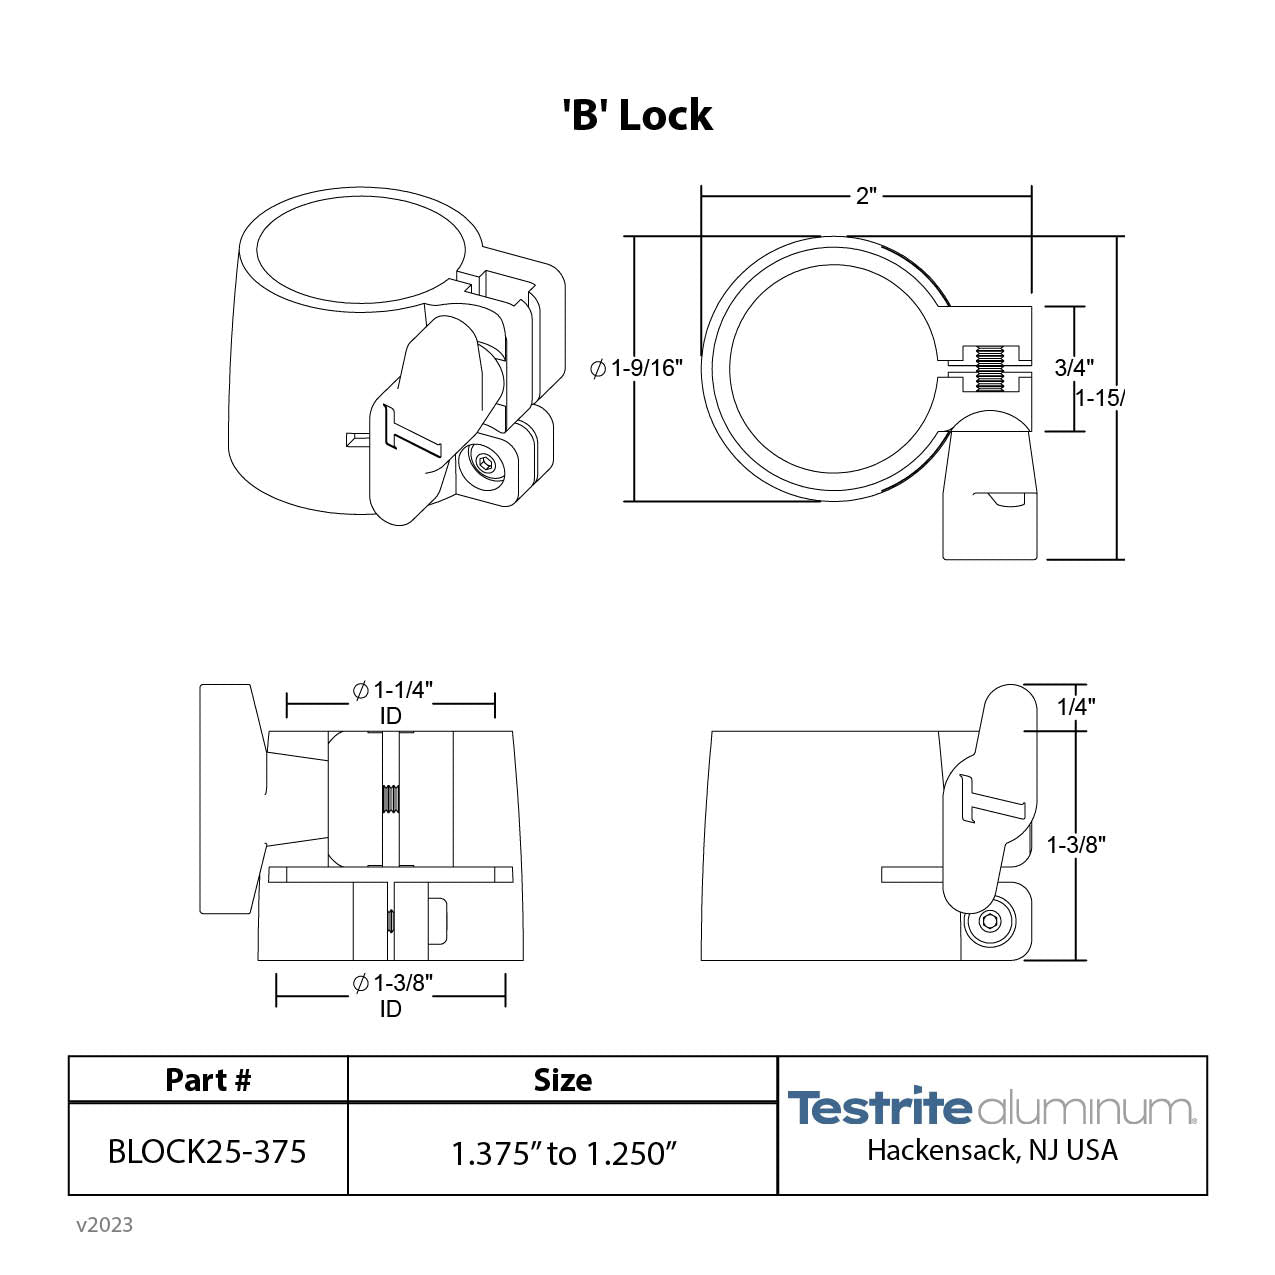 Spec Card B Split Collar Lock 1-1/4" to 1-3/8", 1.25" to 1.375" Telescopic tubing clamp